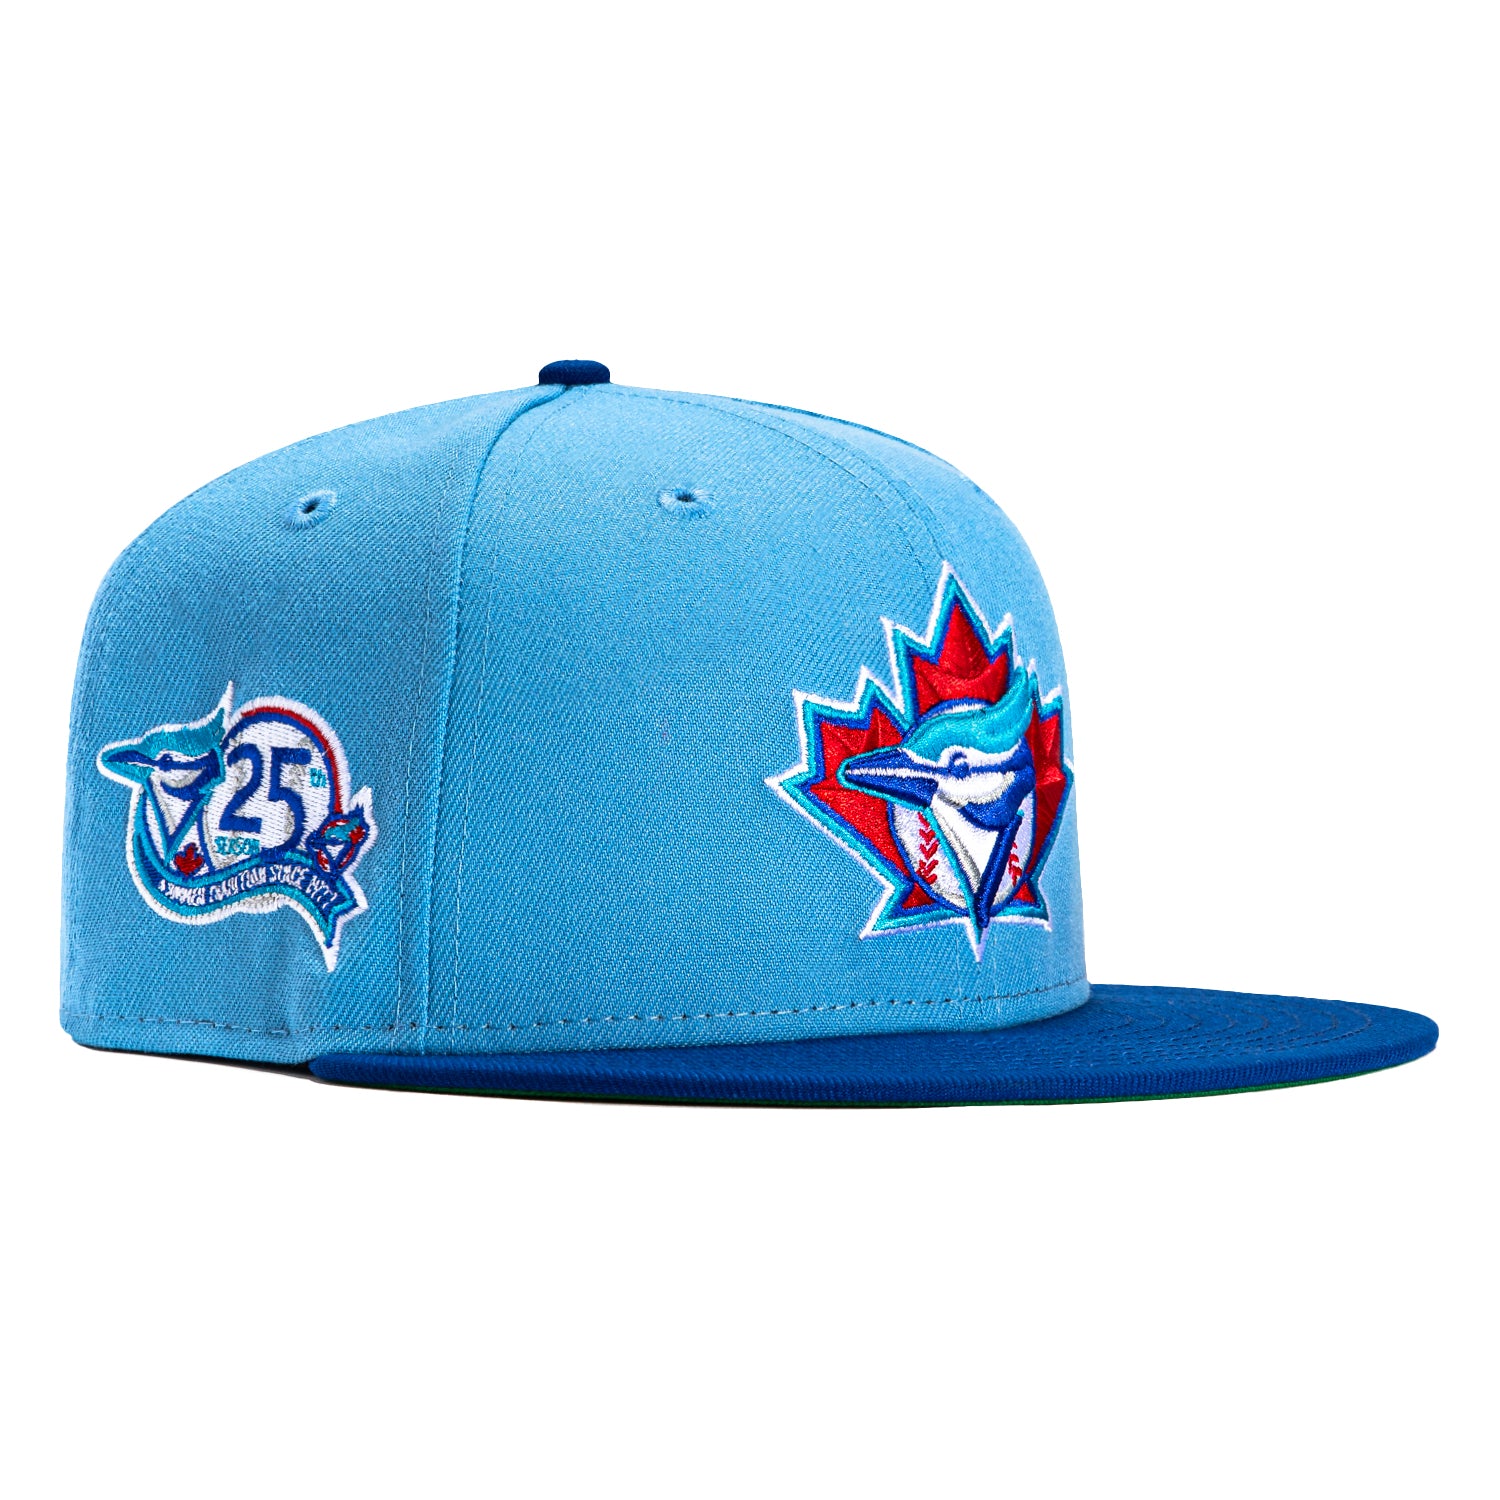 New Era 59Fifty Toronto Blue Jays 25th Anniversary Patch Hat